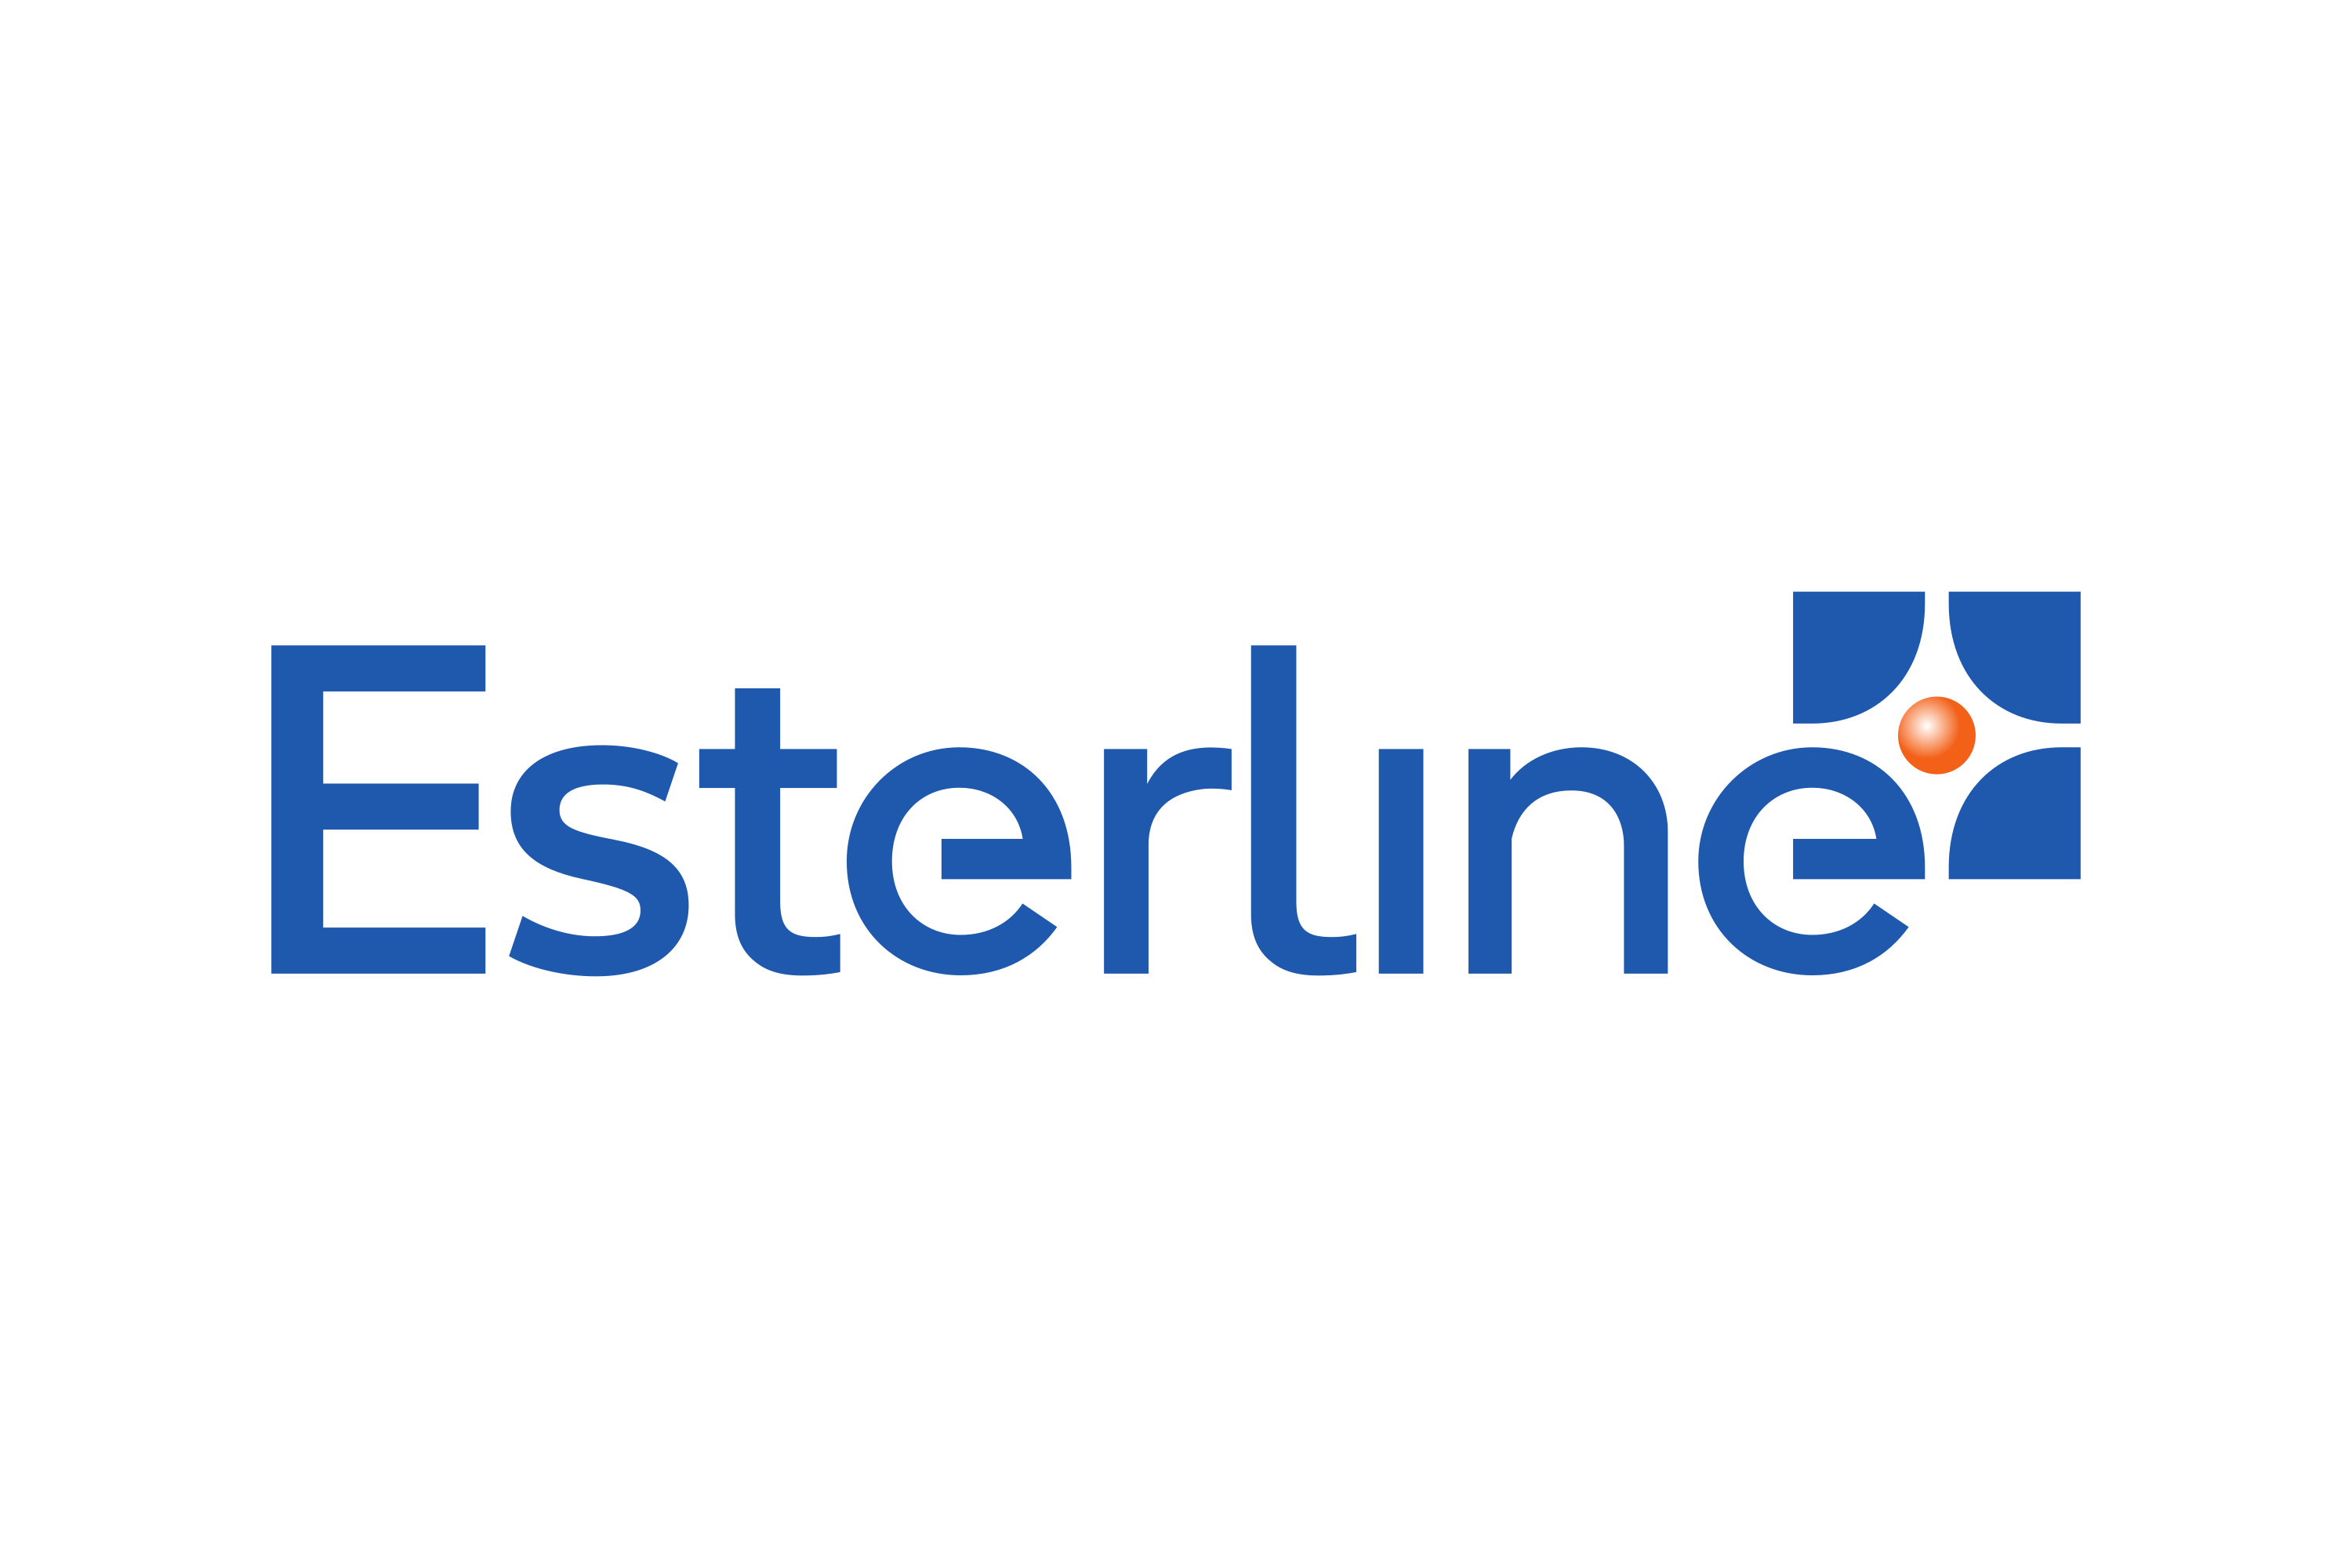 Esterline Logo